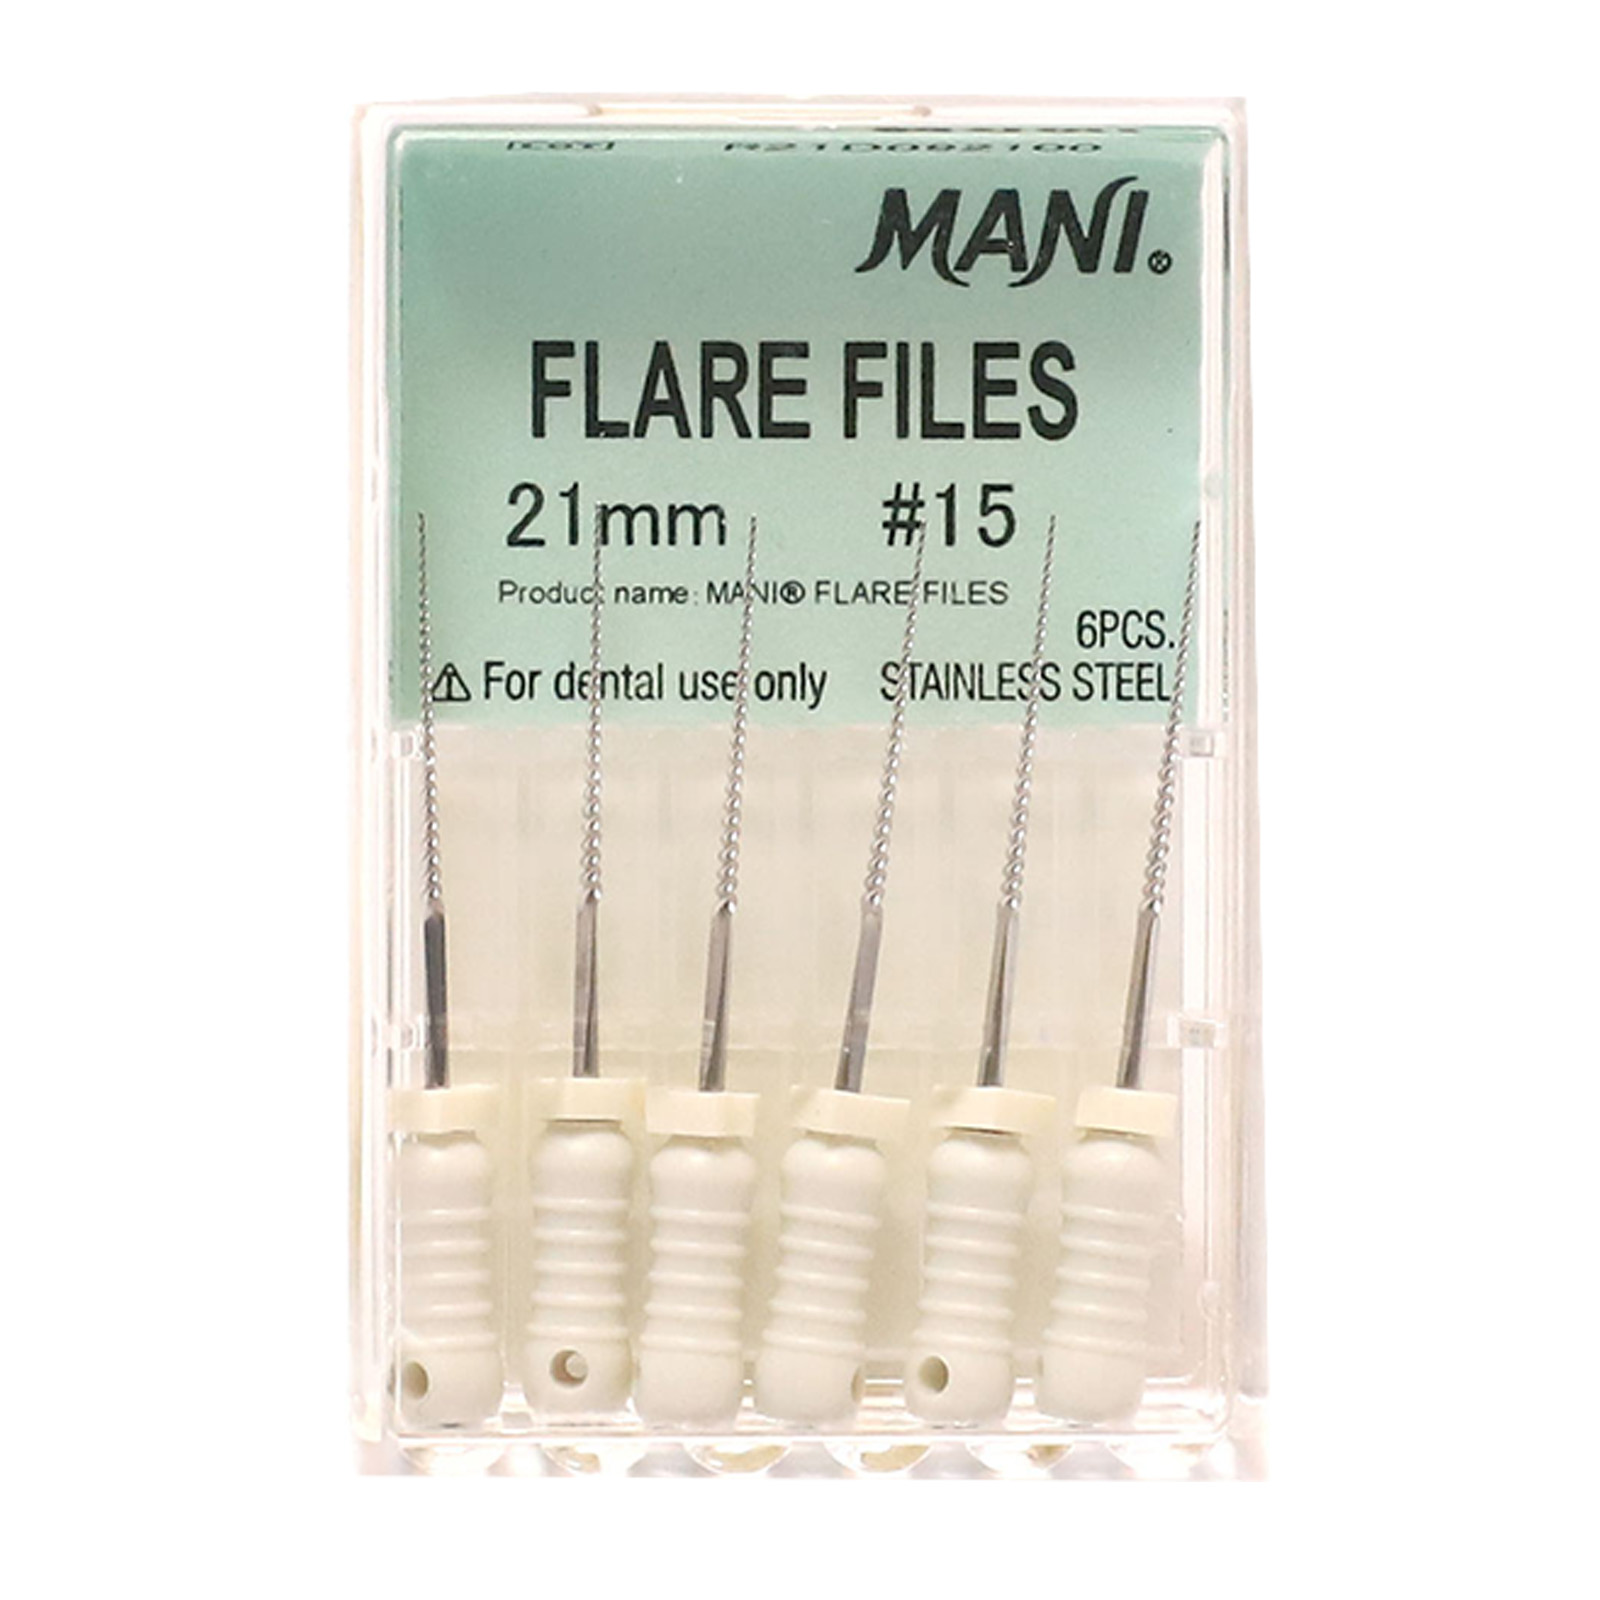 Mani Flare Files #15 21mm